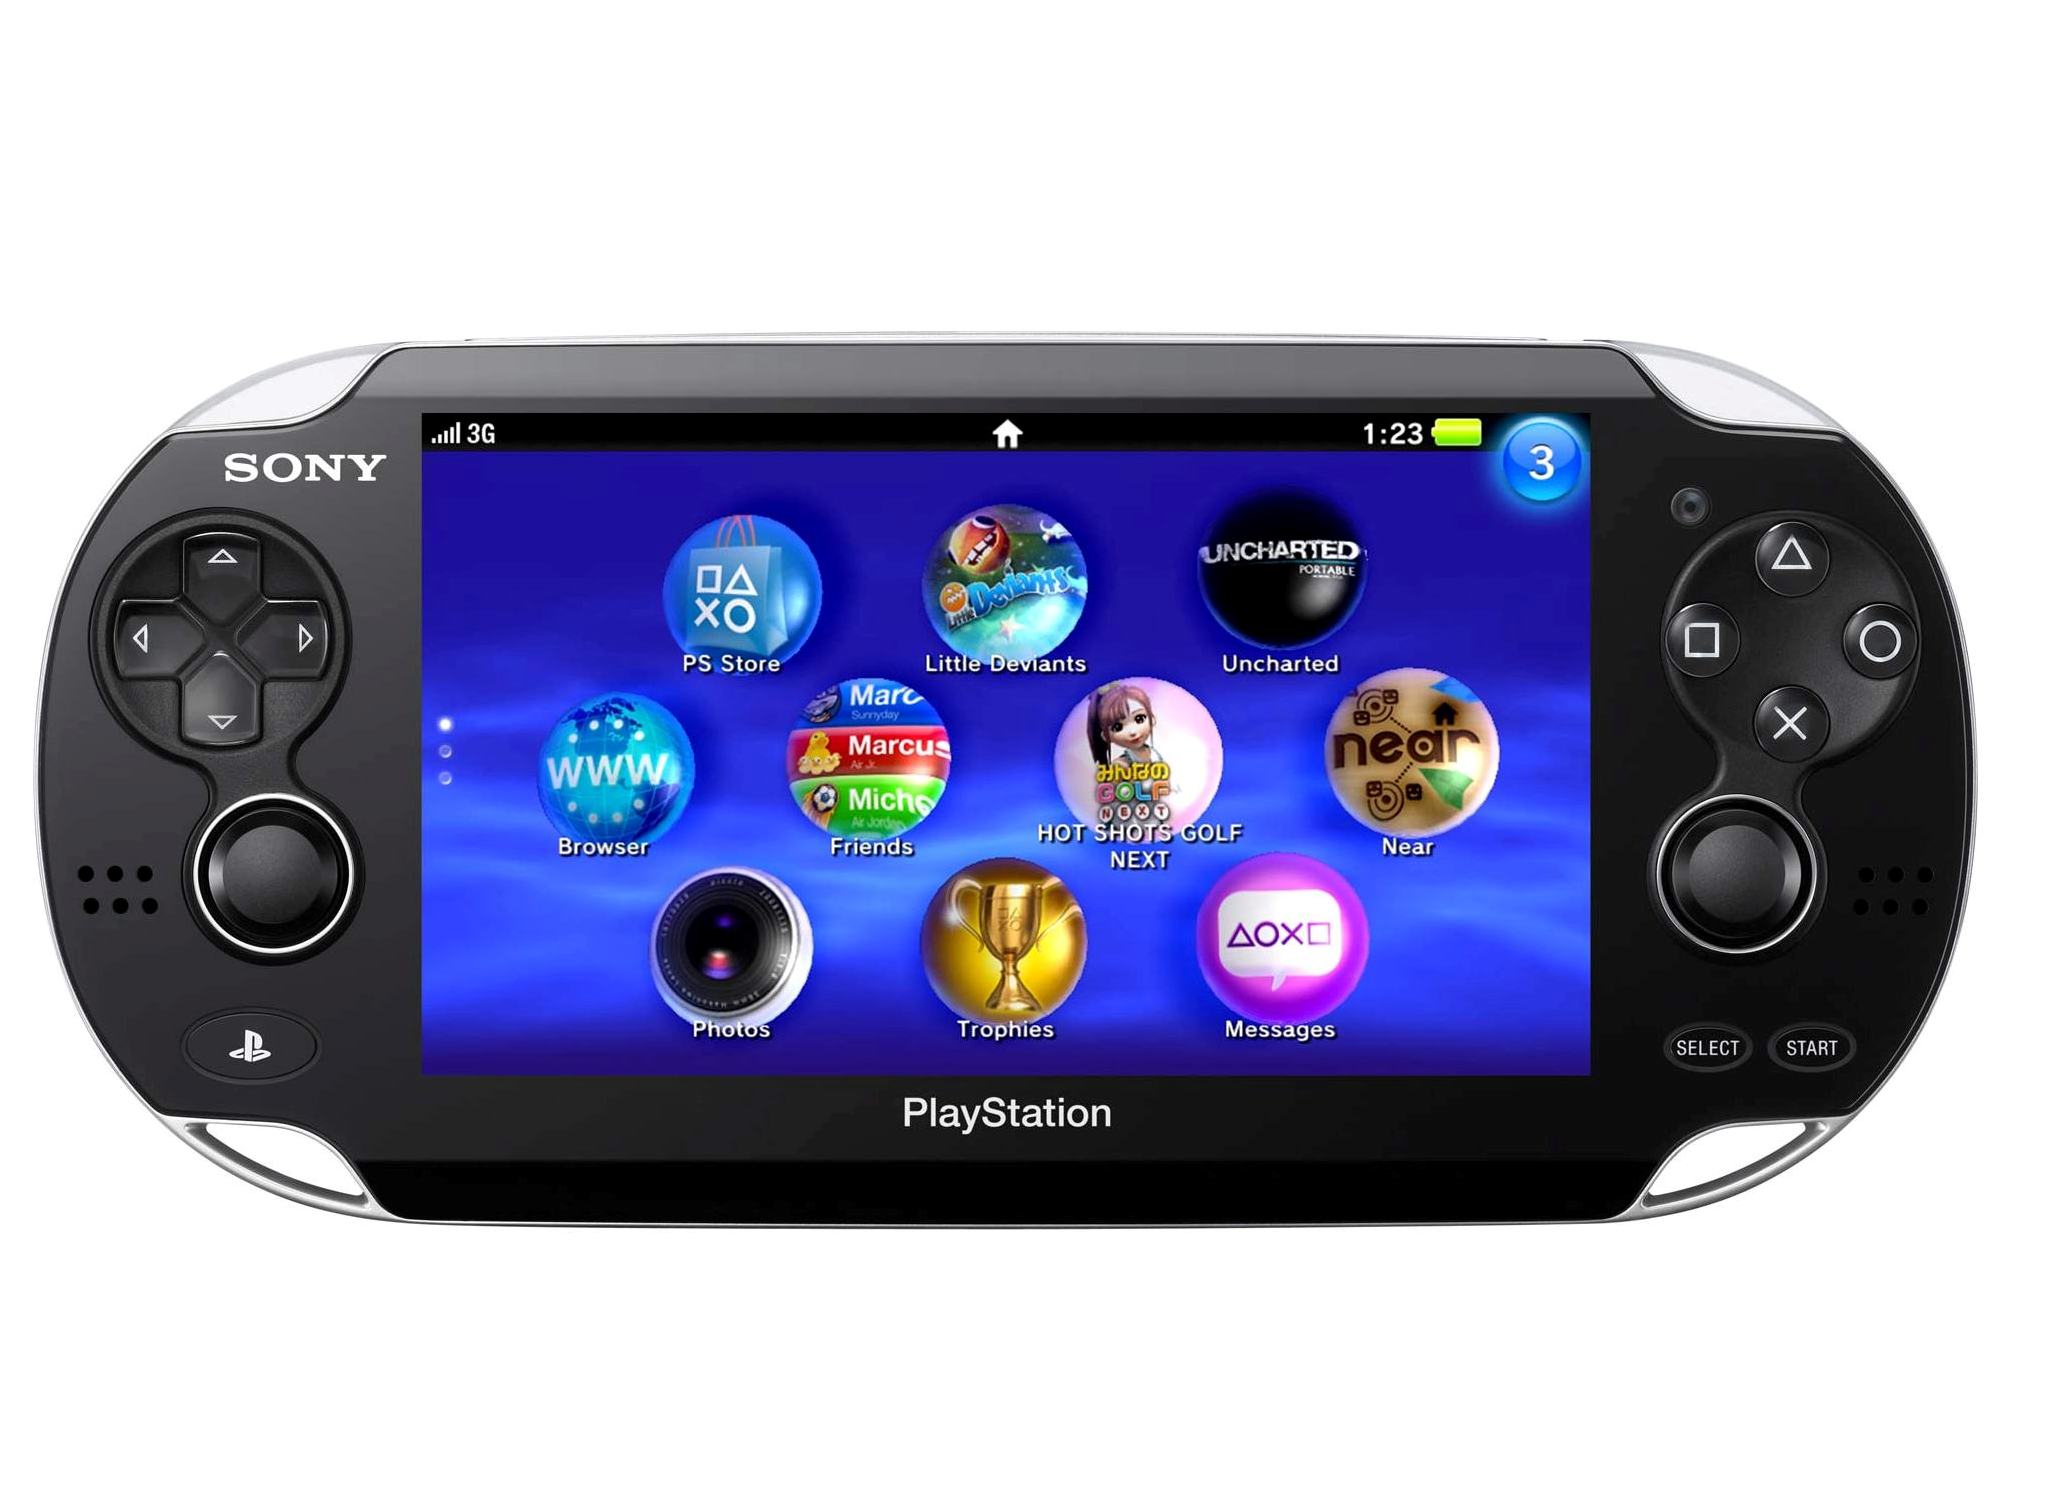 overschot stereo team PS Vita to stream PlayStation 3 games? | TechRadar